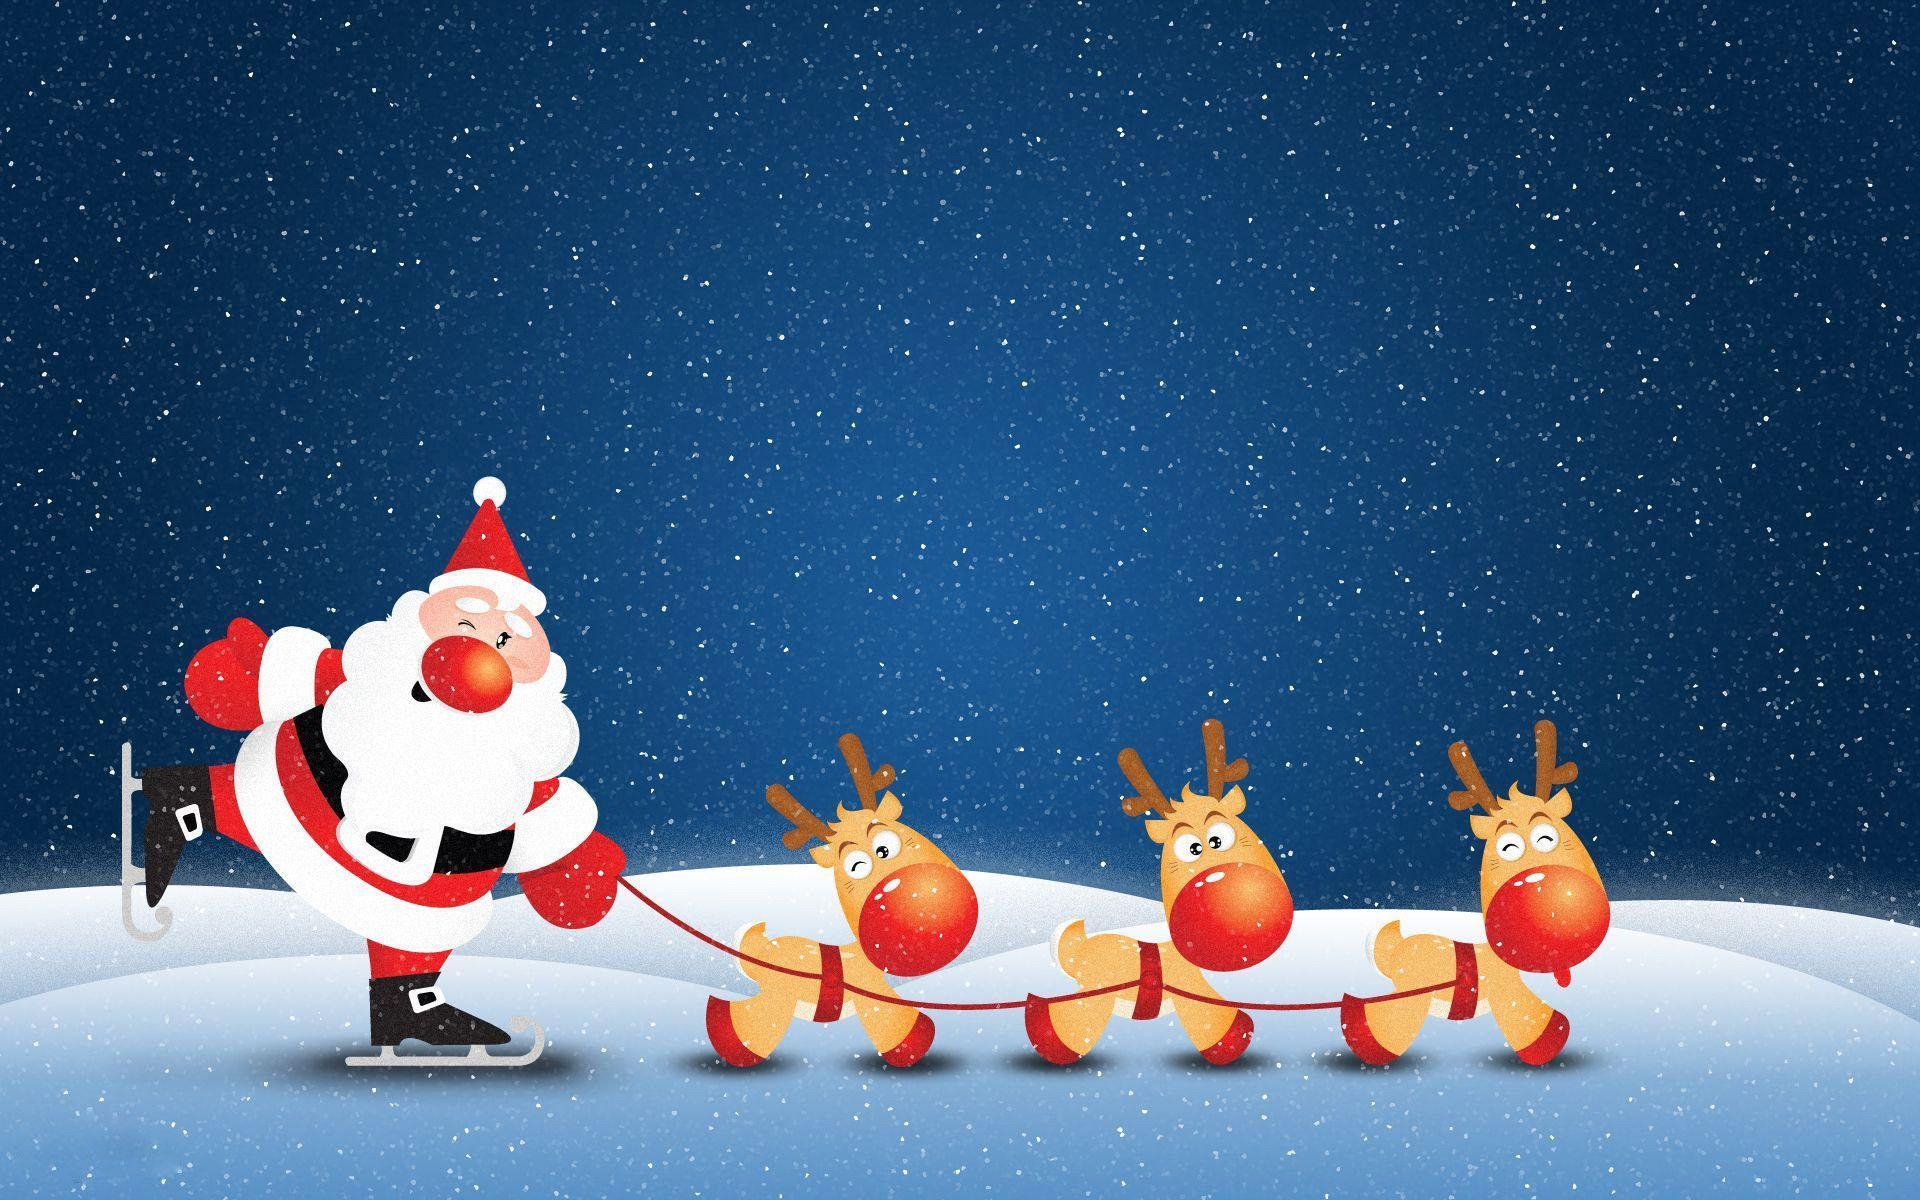 Santa Claus and Christmas timeHello Holidays, Holidays Time